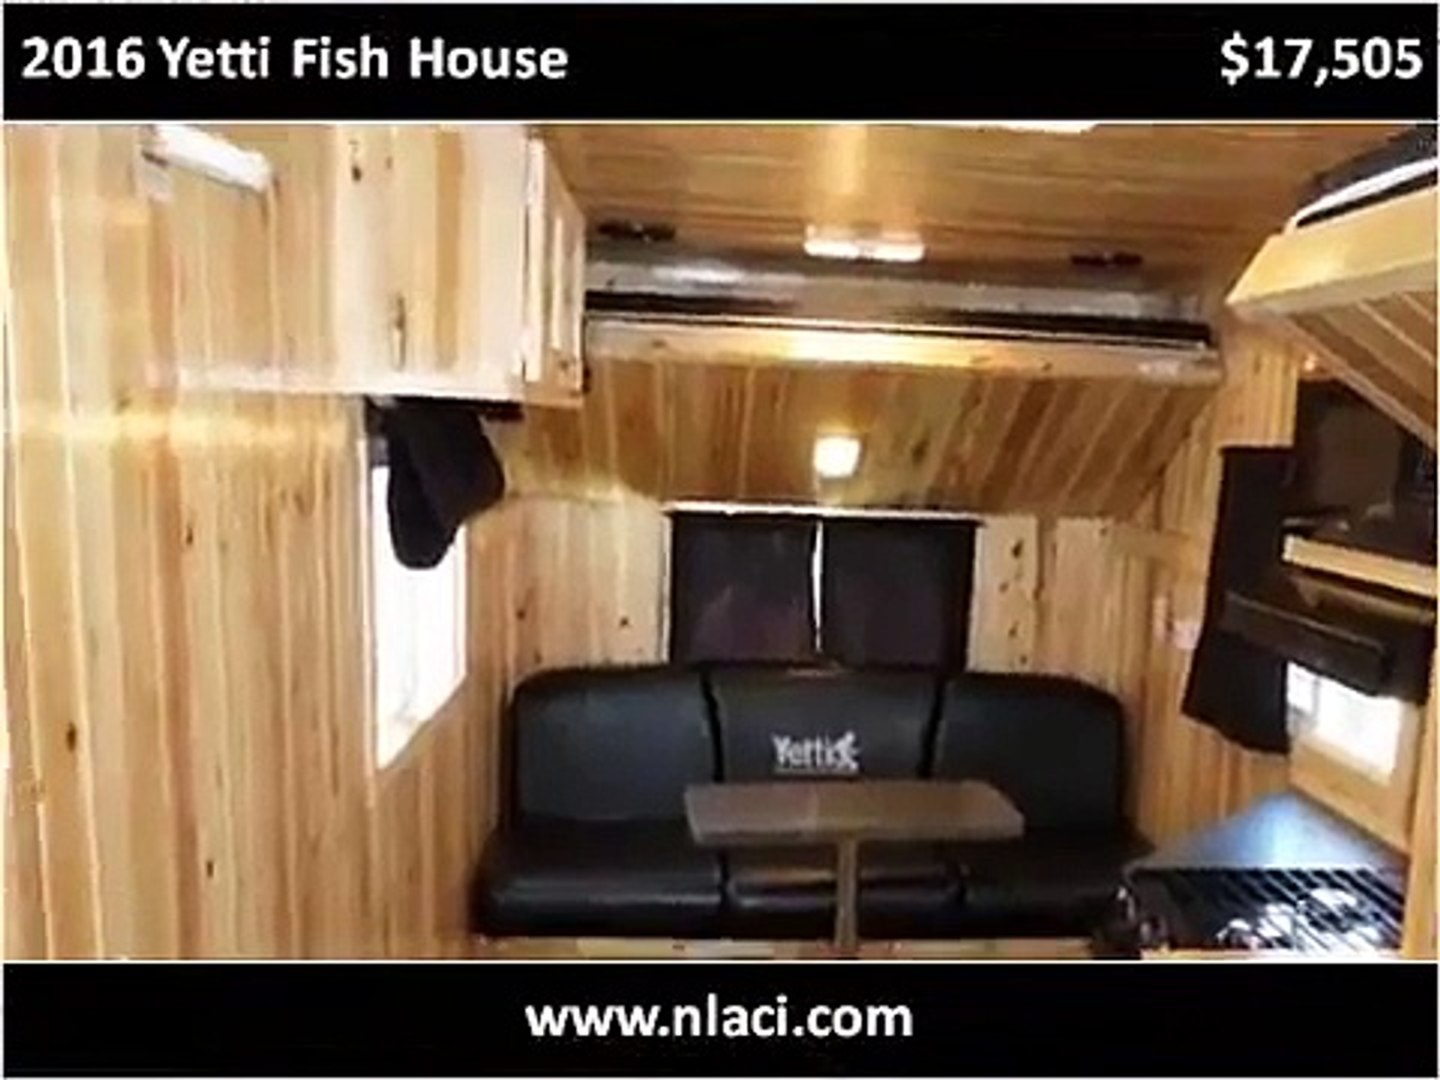 2016 Yetti Fish House New Cars Milaca Mn